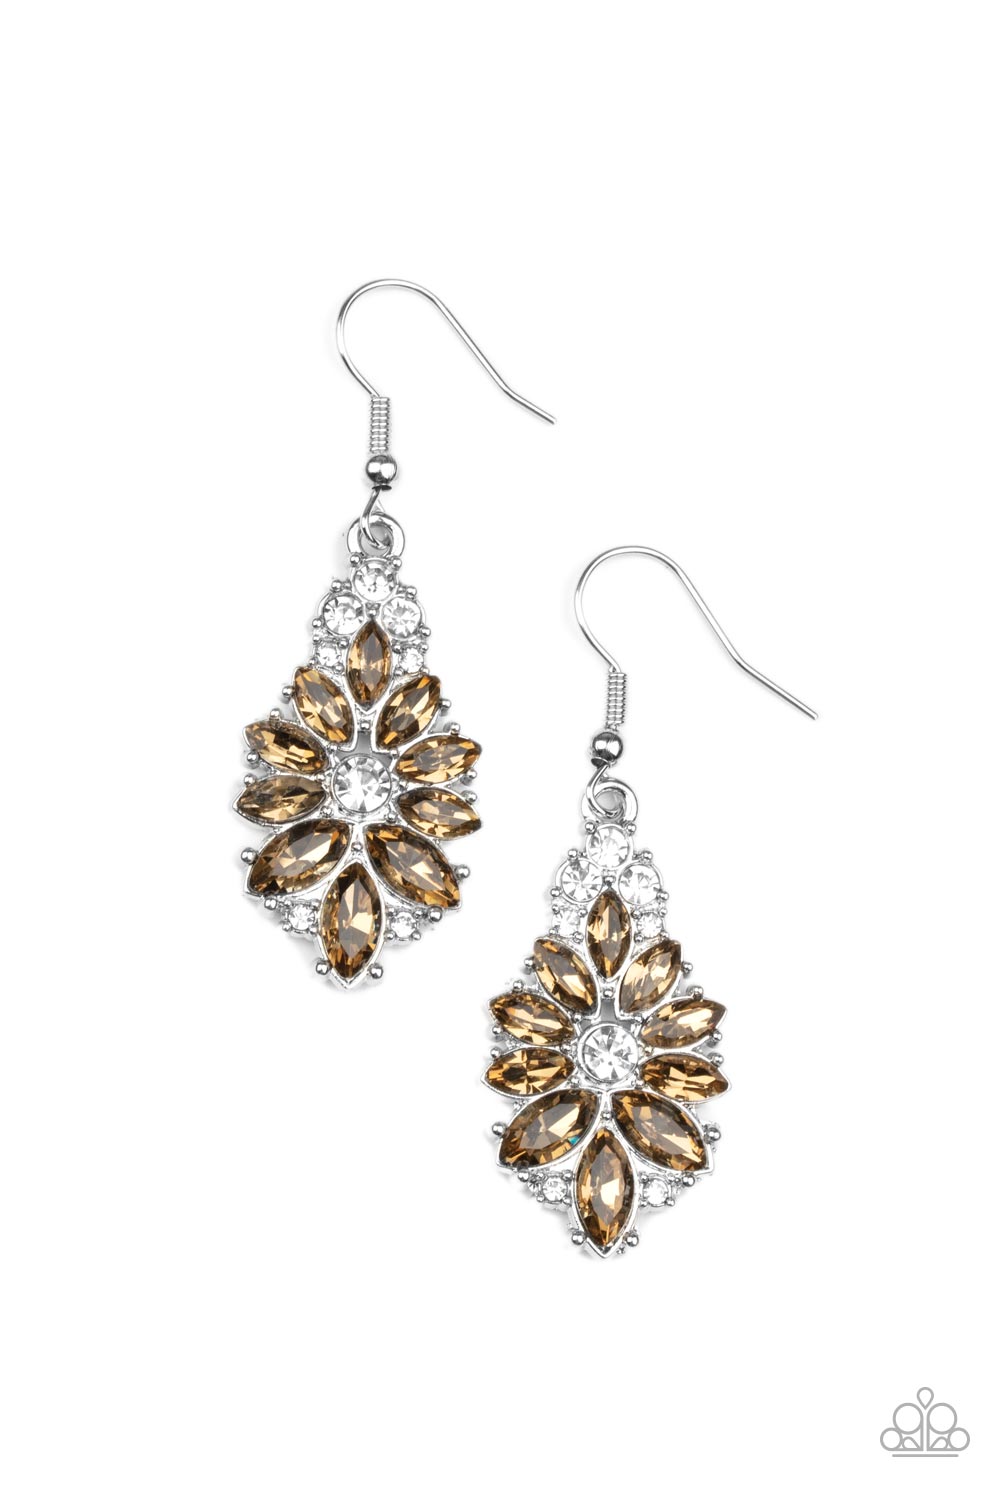 Gala Goddess Brown Rhinestone Earrings - Paparazzi Accessories- lightbox - CarasShop.com - $5 Jewelry by Cara Jewels